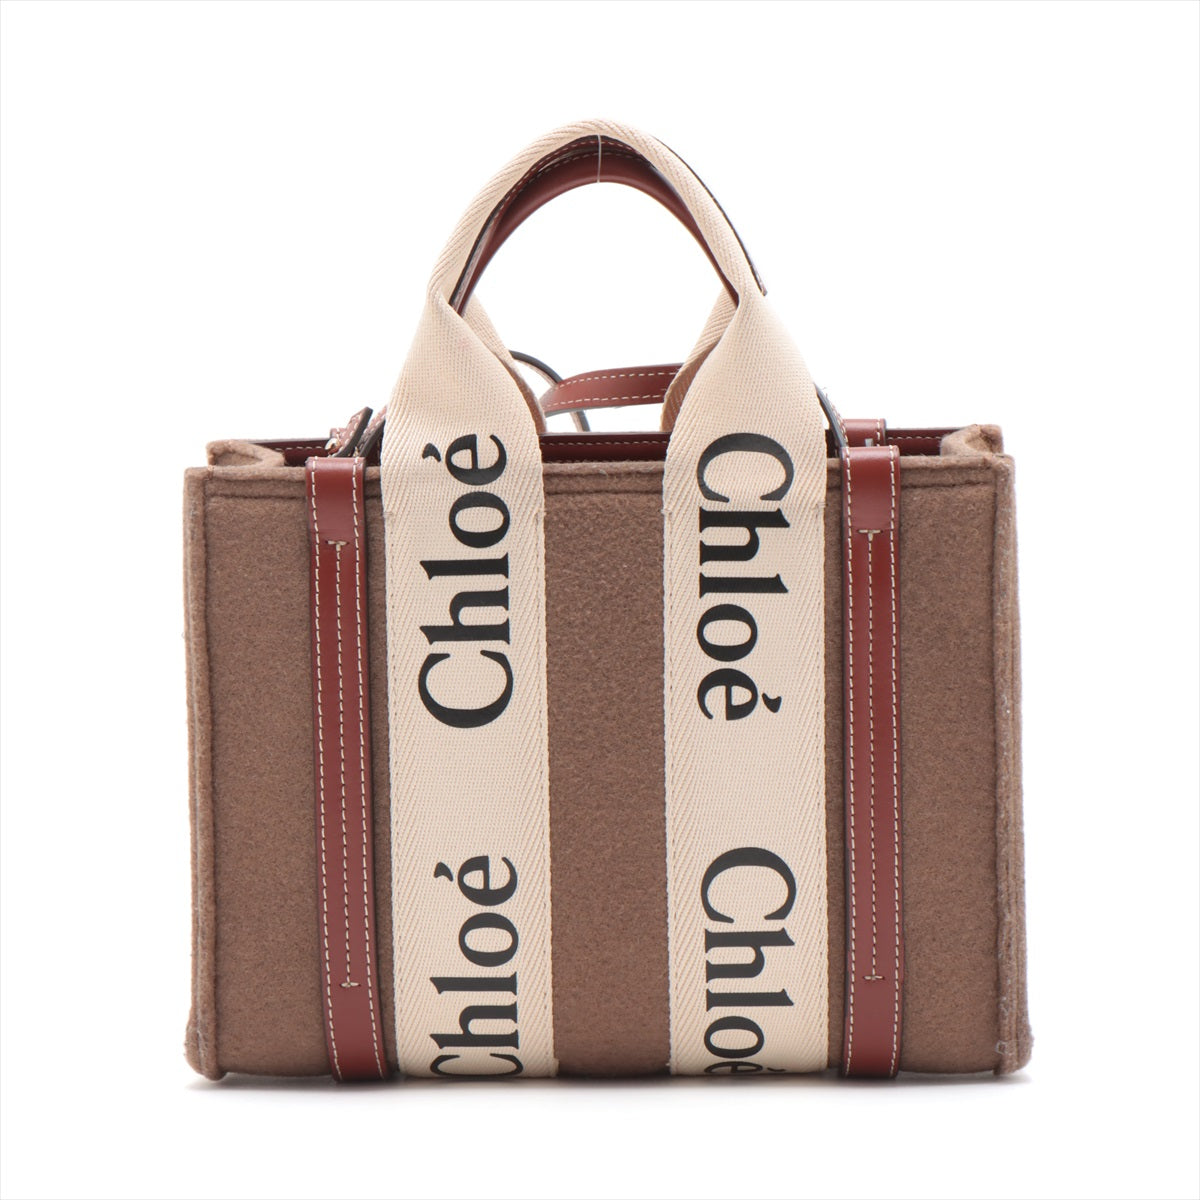 Chloe woody small Felt x Leather 2way handbag Brown External edge adhering